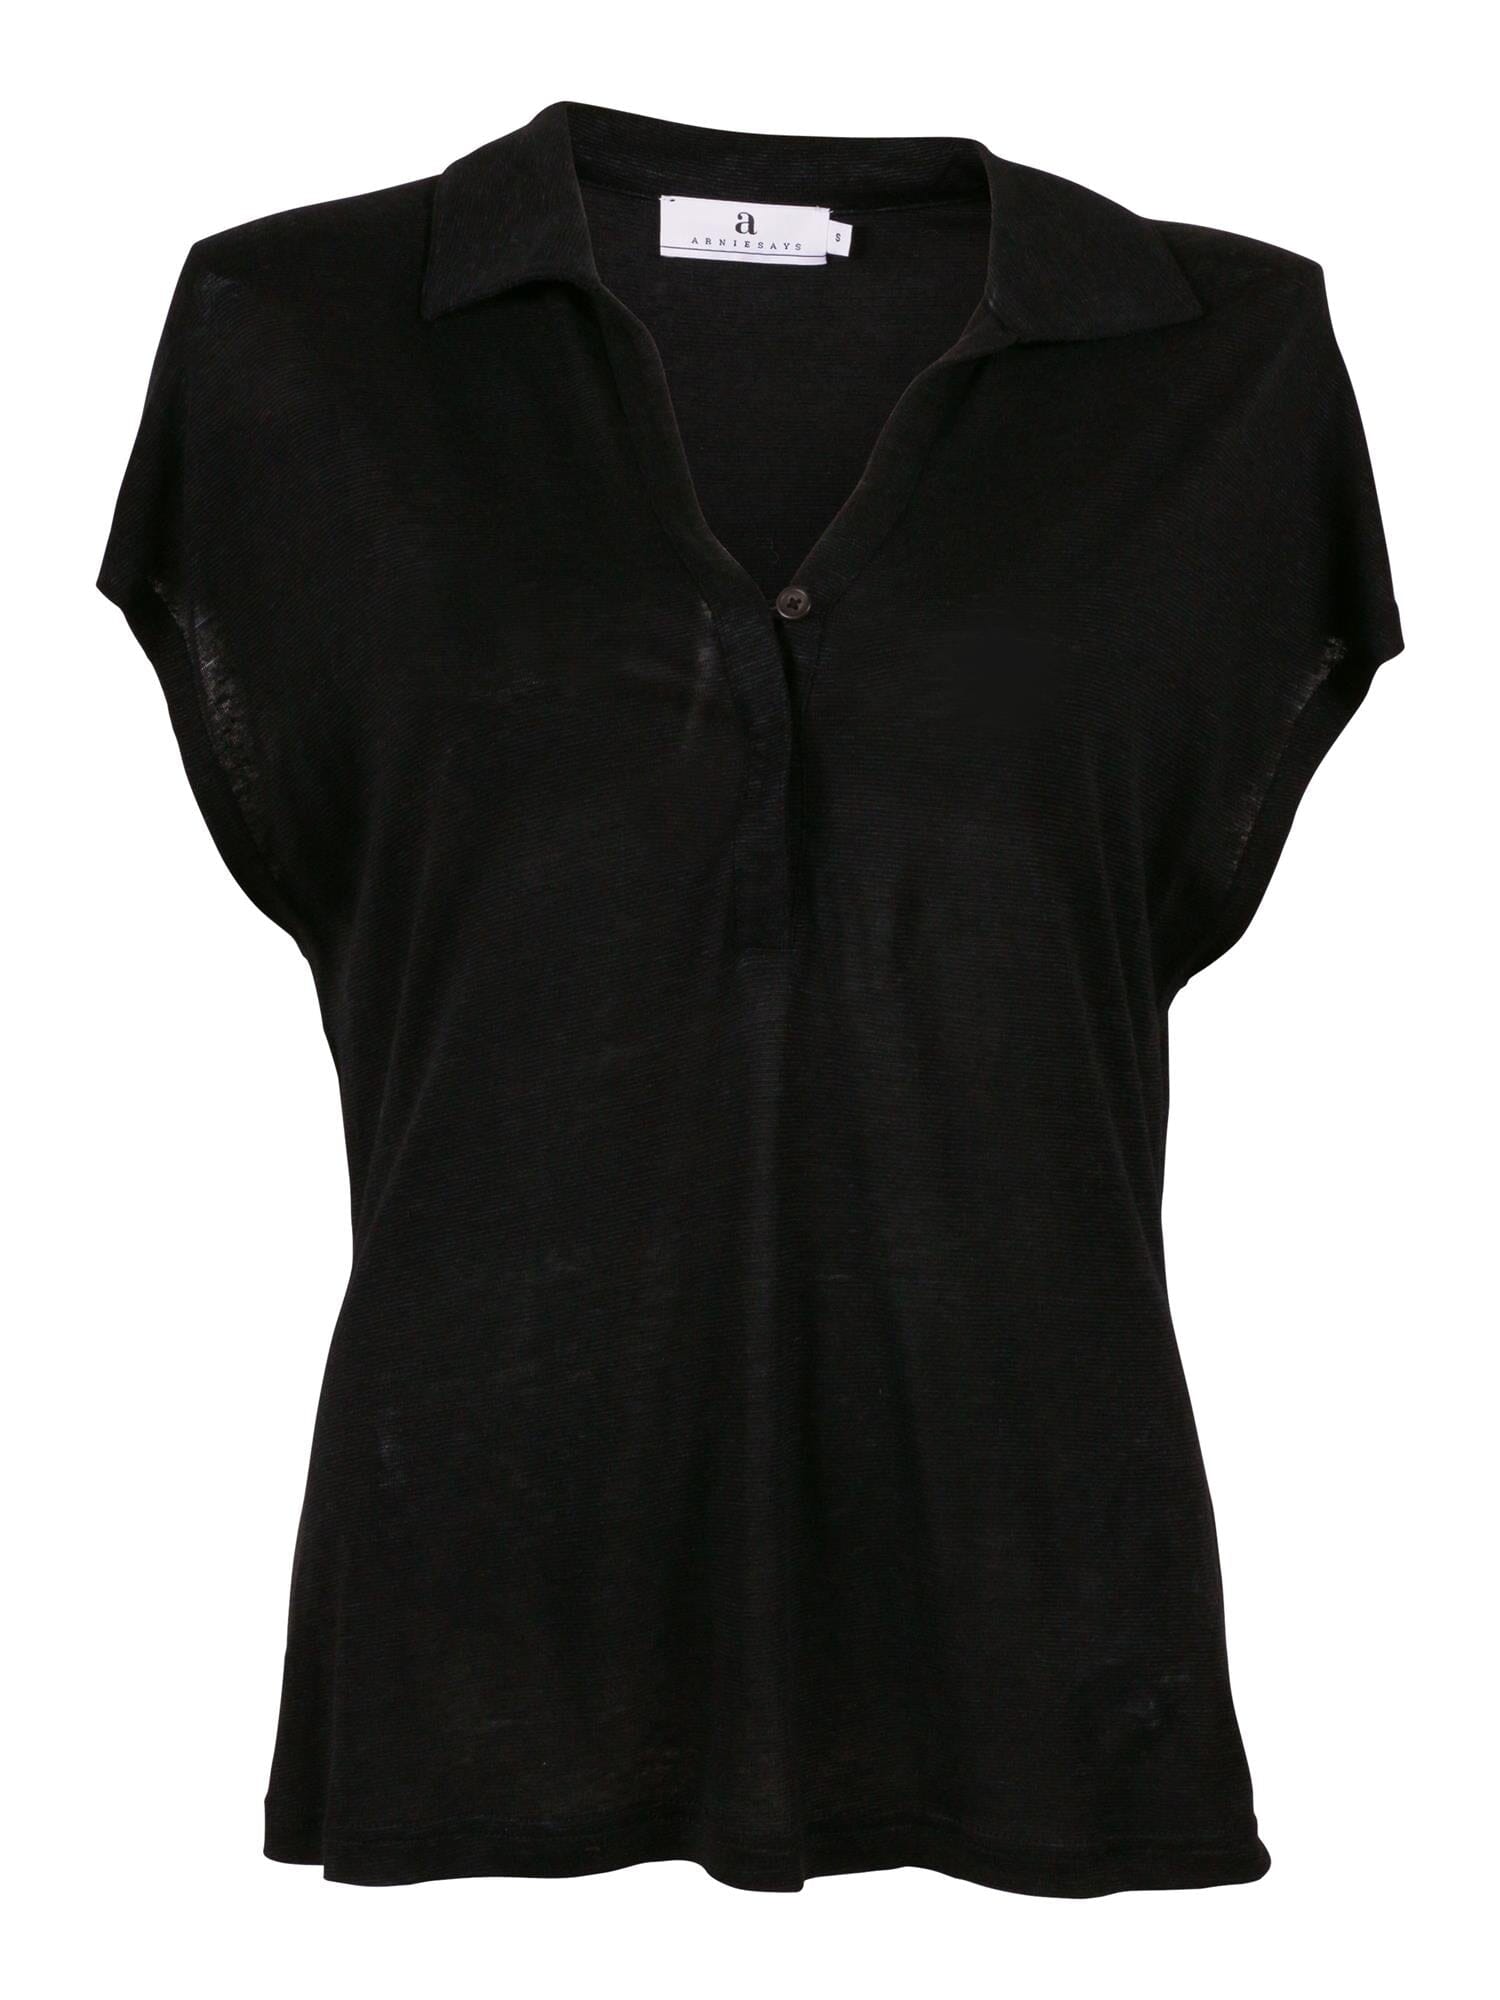 ArnieSays: Embry Linen Black T-shirt